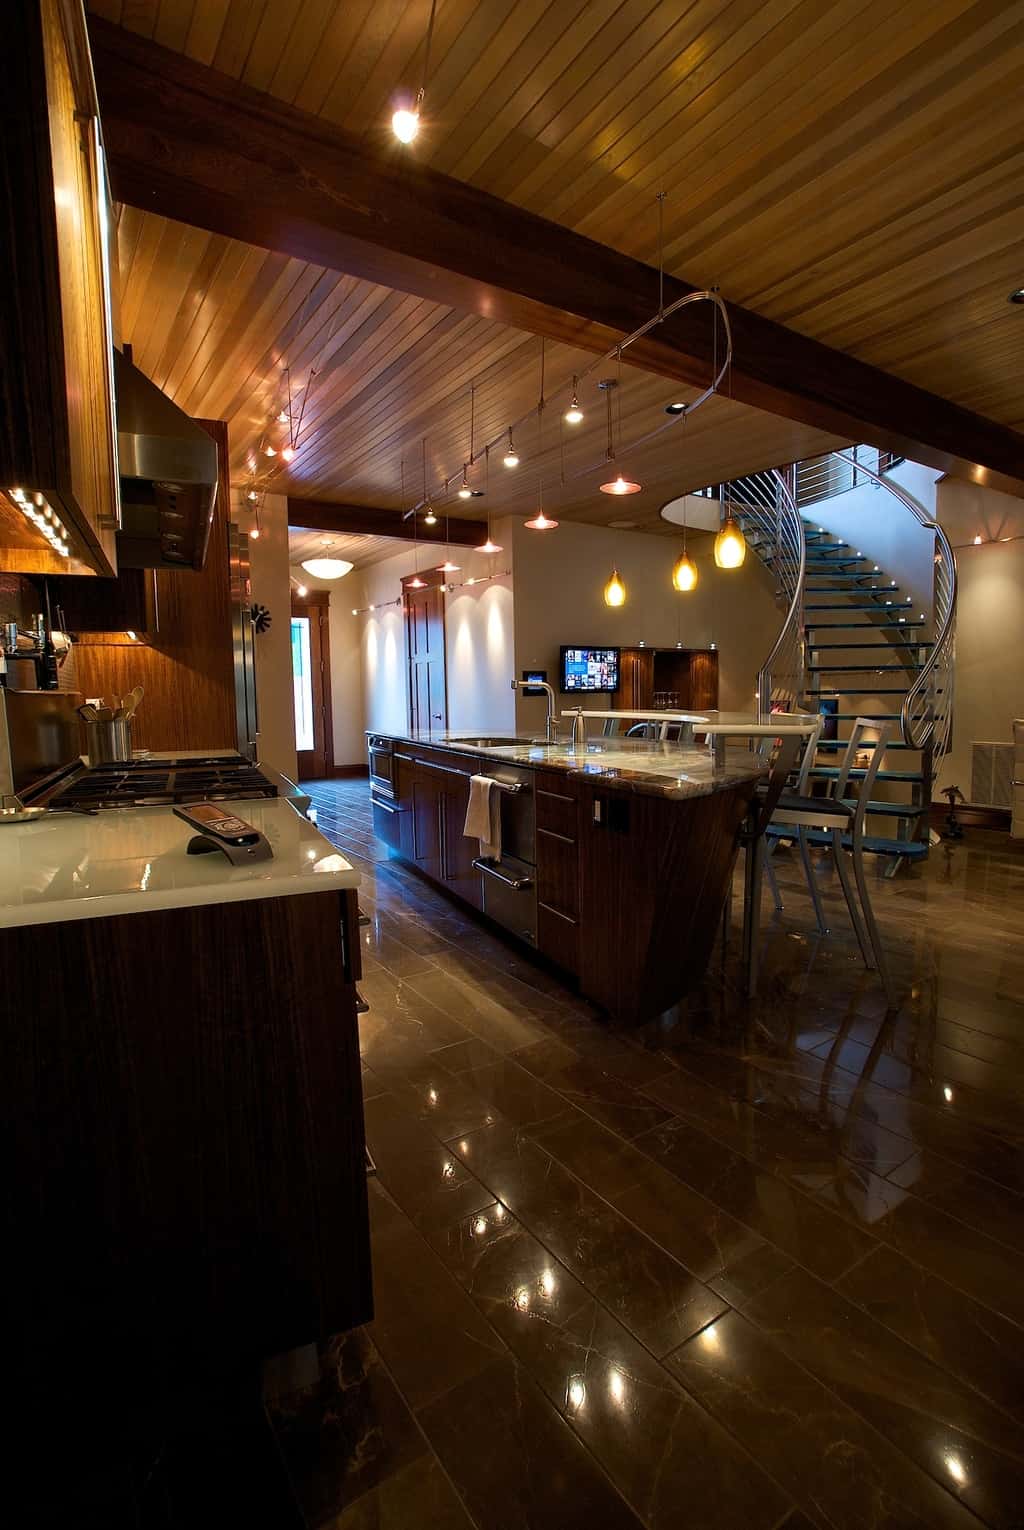 Kitchen and Bath Remodeling Companies Near Me Salem Oregon - Cypress Homess LLC (503) 689-5115